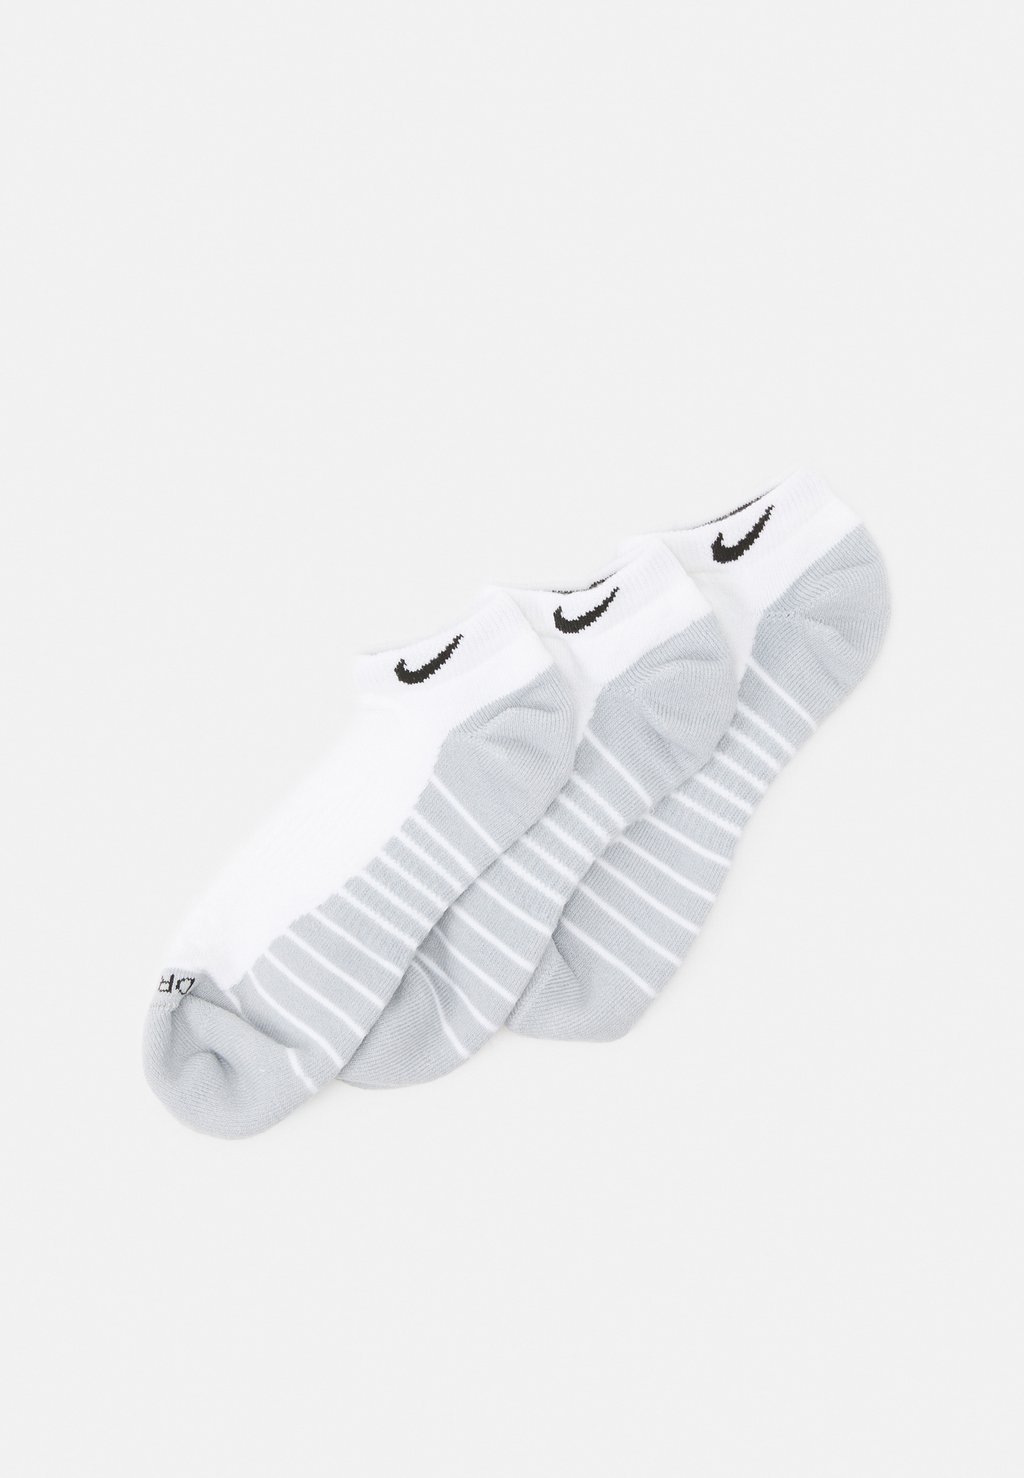 Спортивные носки Nike Socken Evry Max Cush, белый/серый